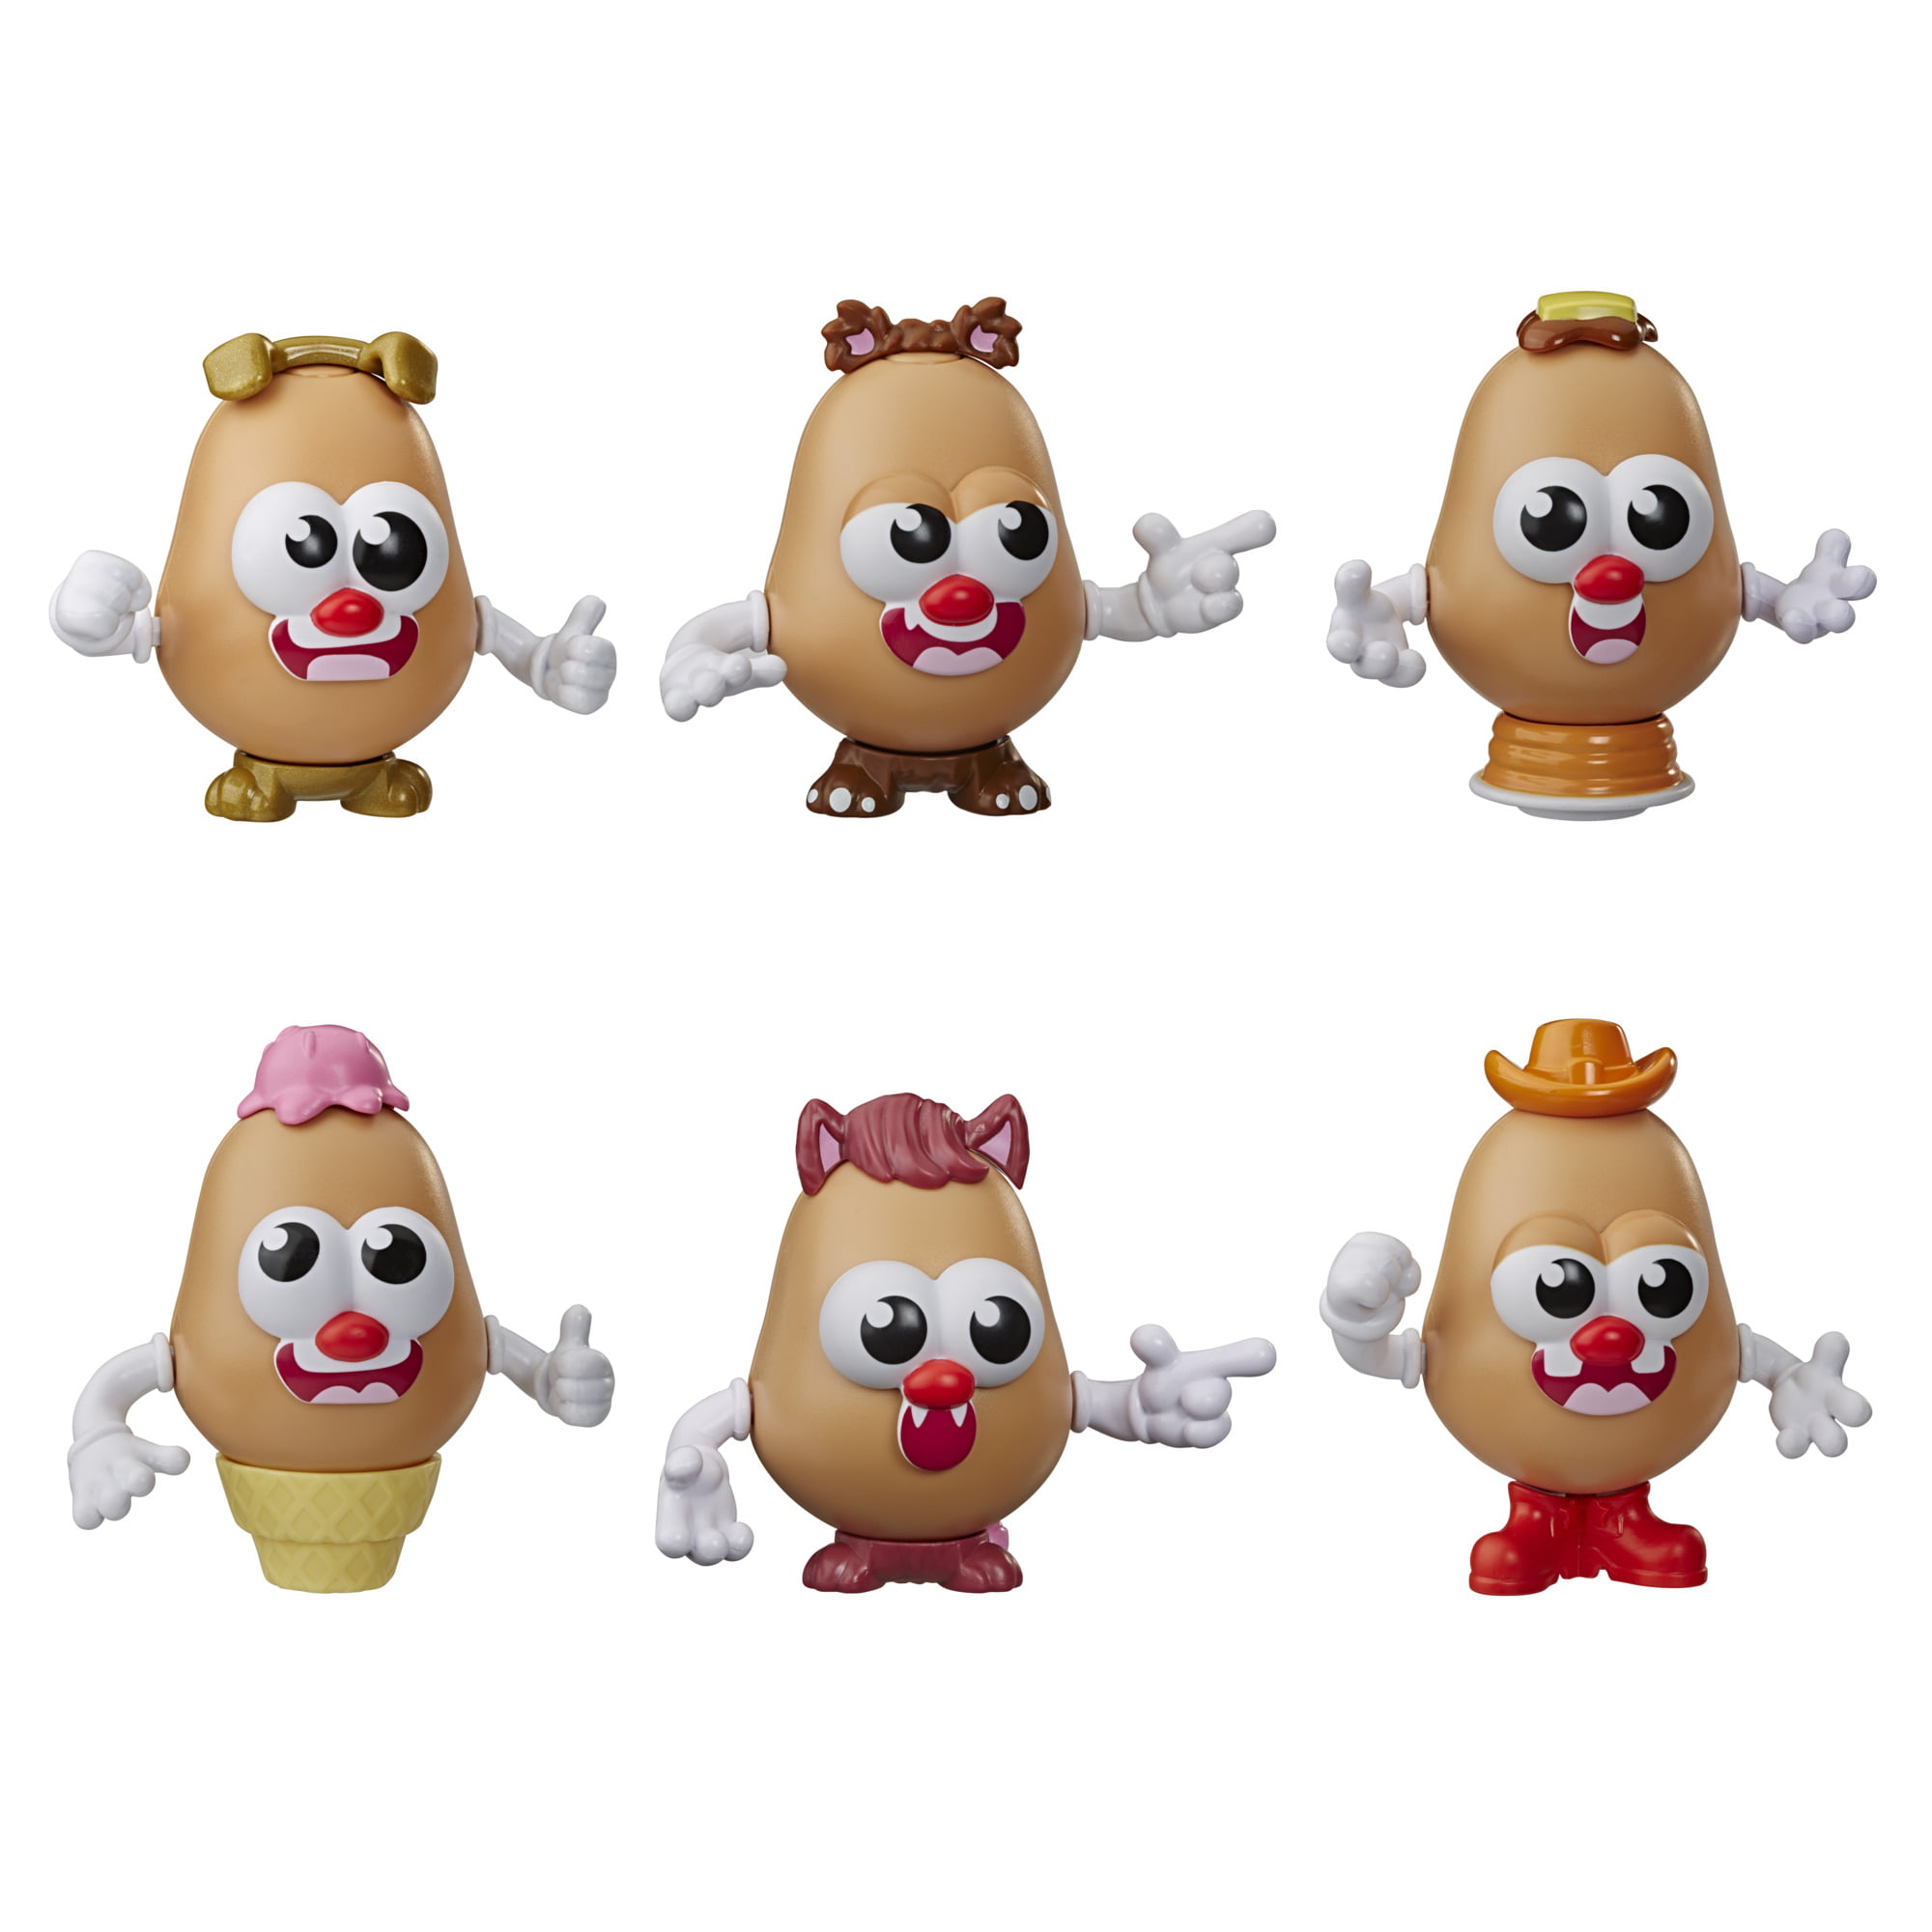 mr potato head costume walmart